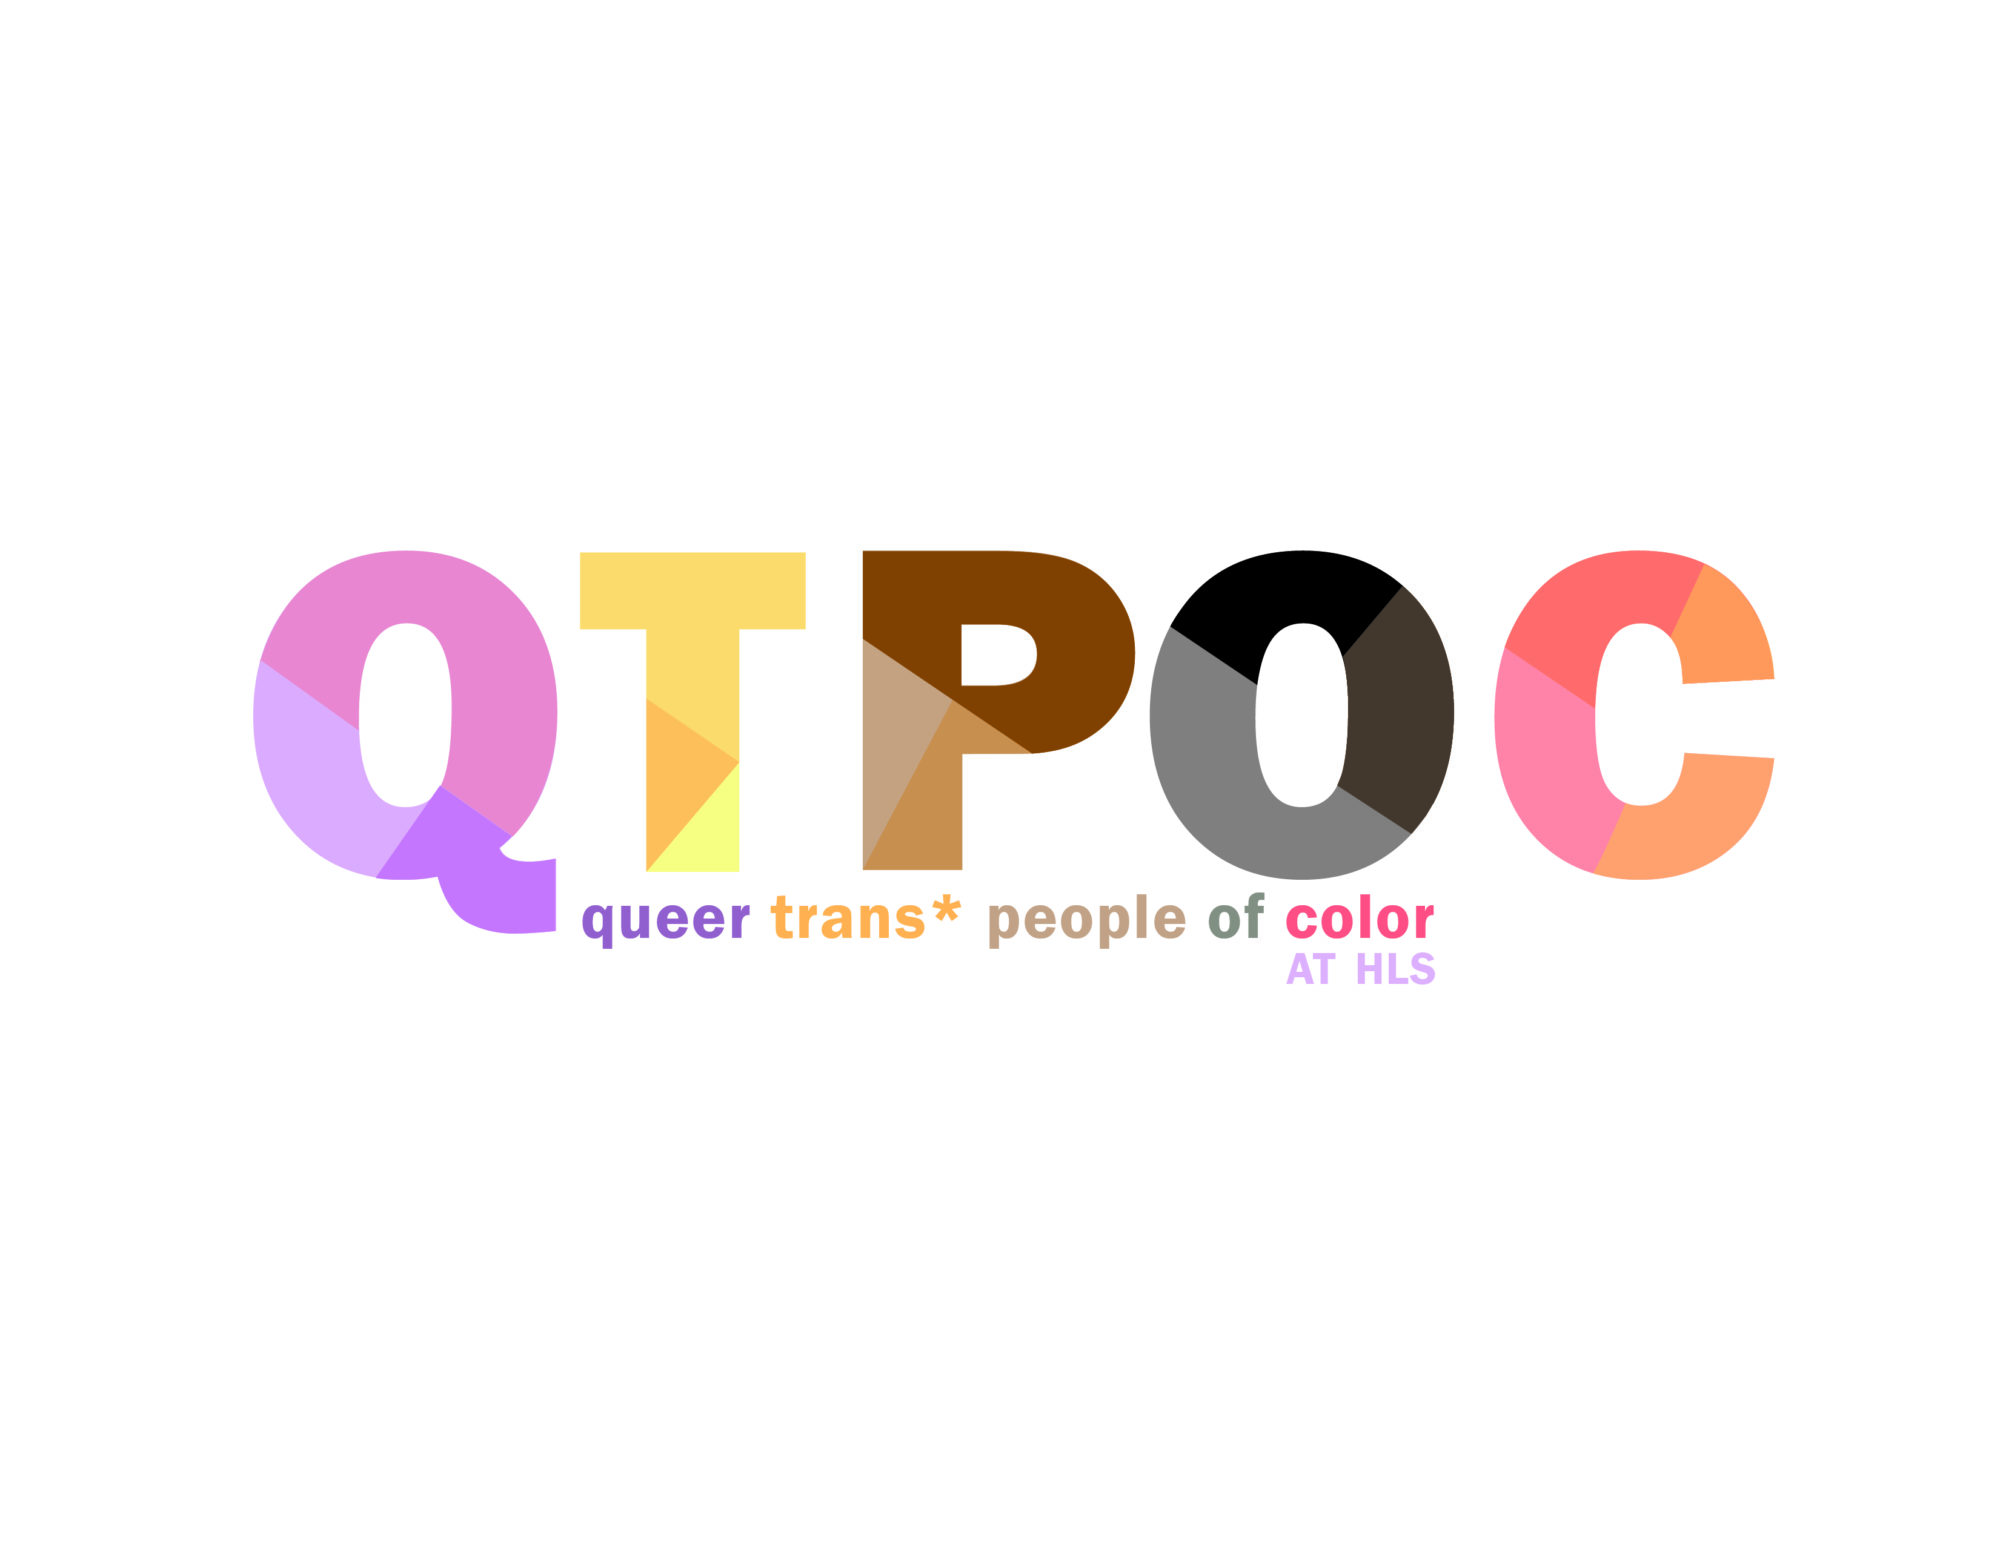 Harvard Law School Queer Trans People of Color